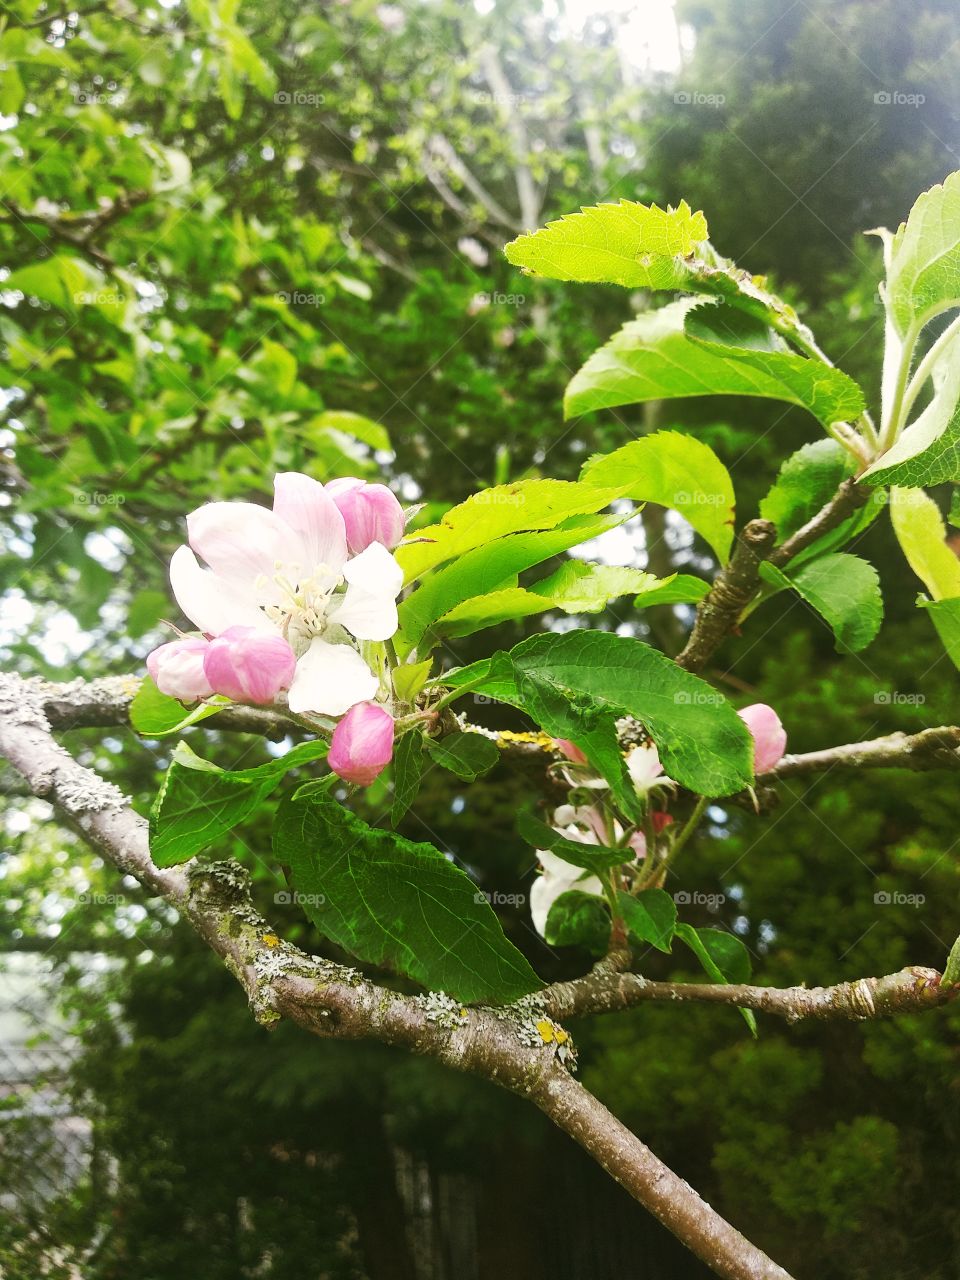 Apple blossom